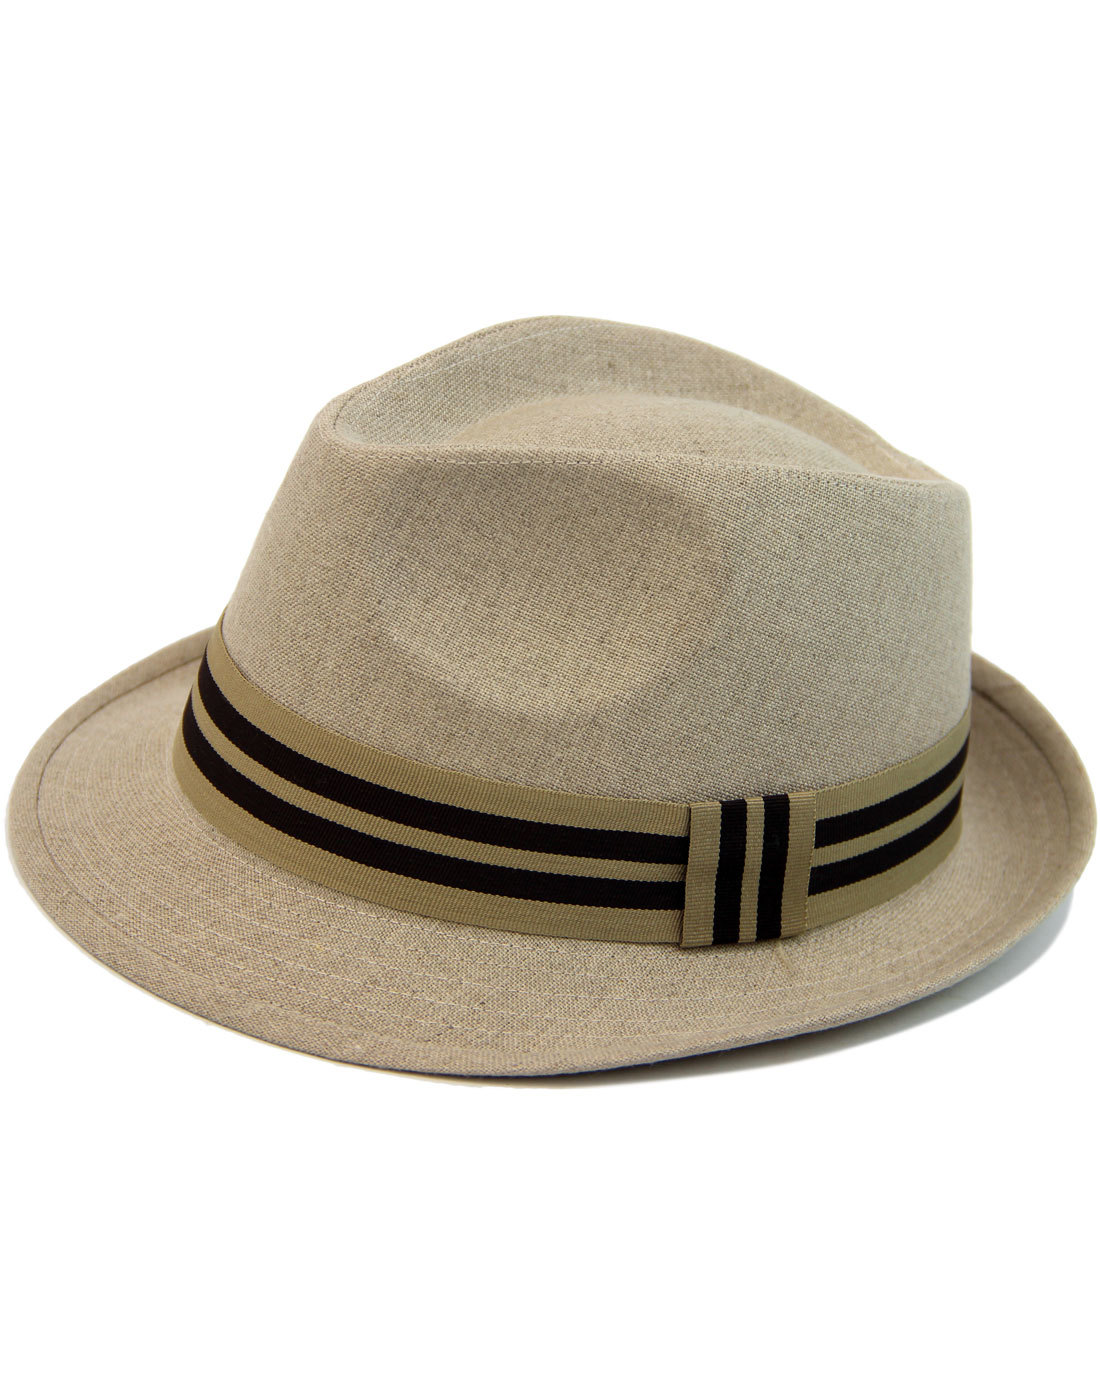 FAILSWORTH Men's Retro Mod Irish Linen Trilby Hat